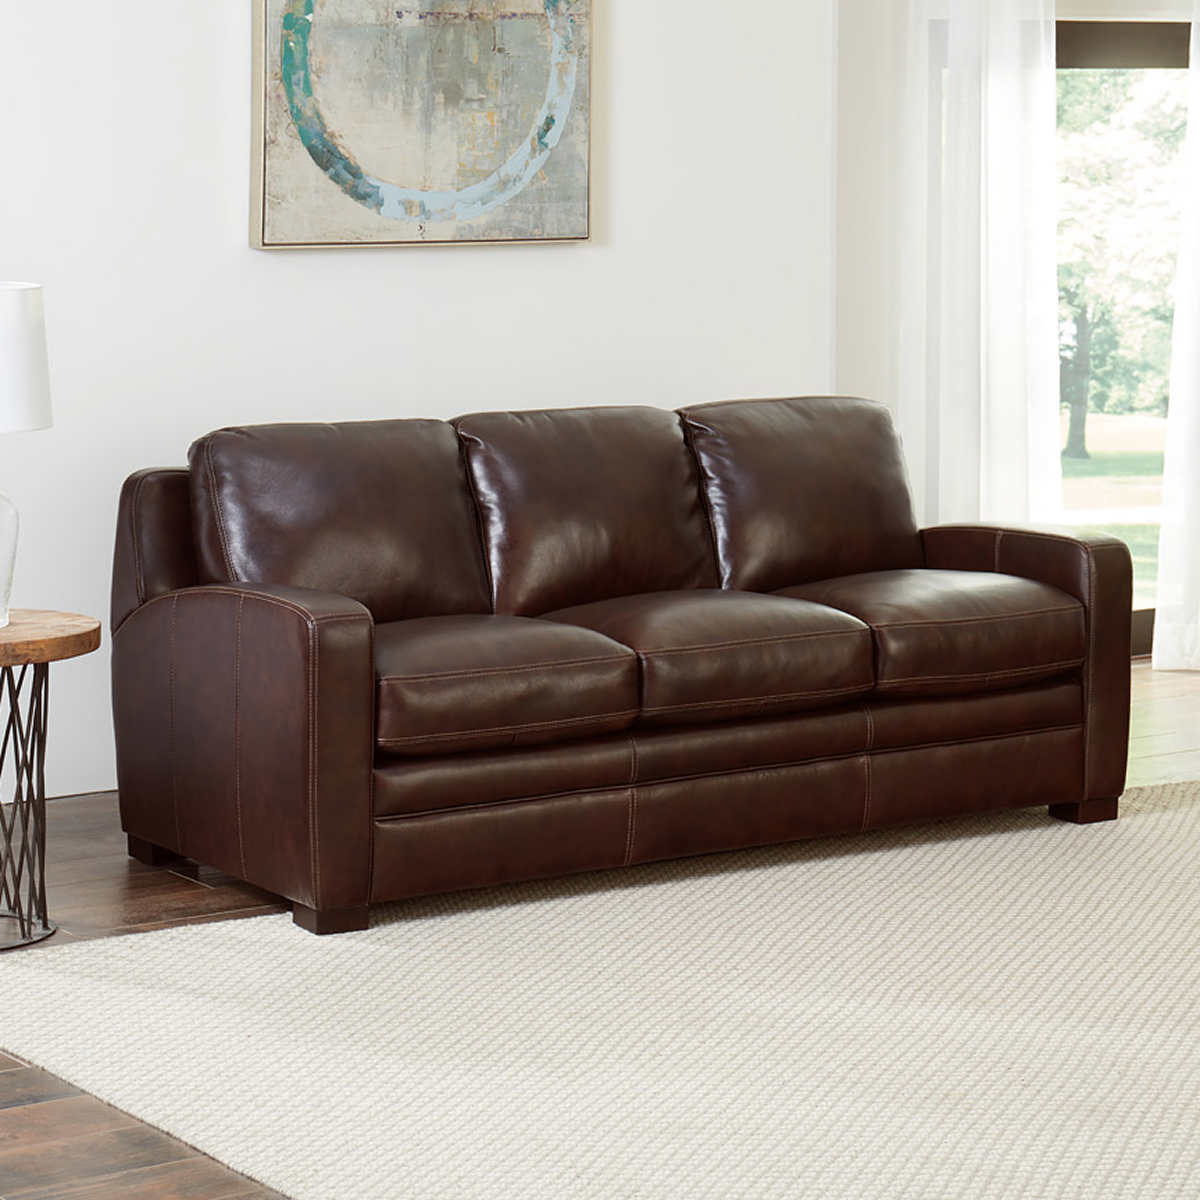 Kalana Leather Sleeper Sofa Costco, Brown Leather Couch Sleeper